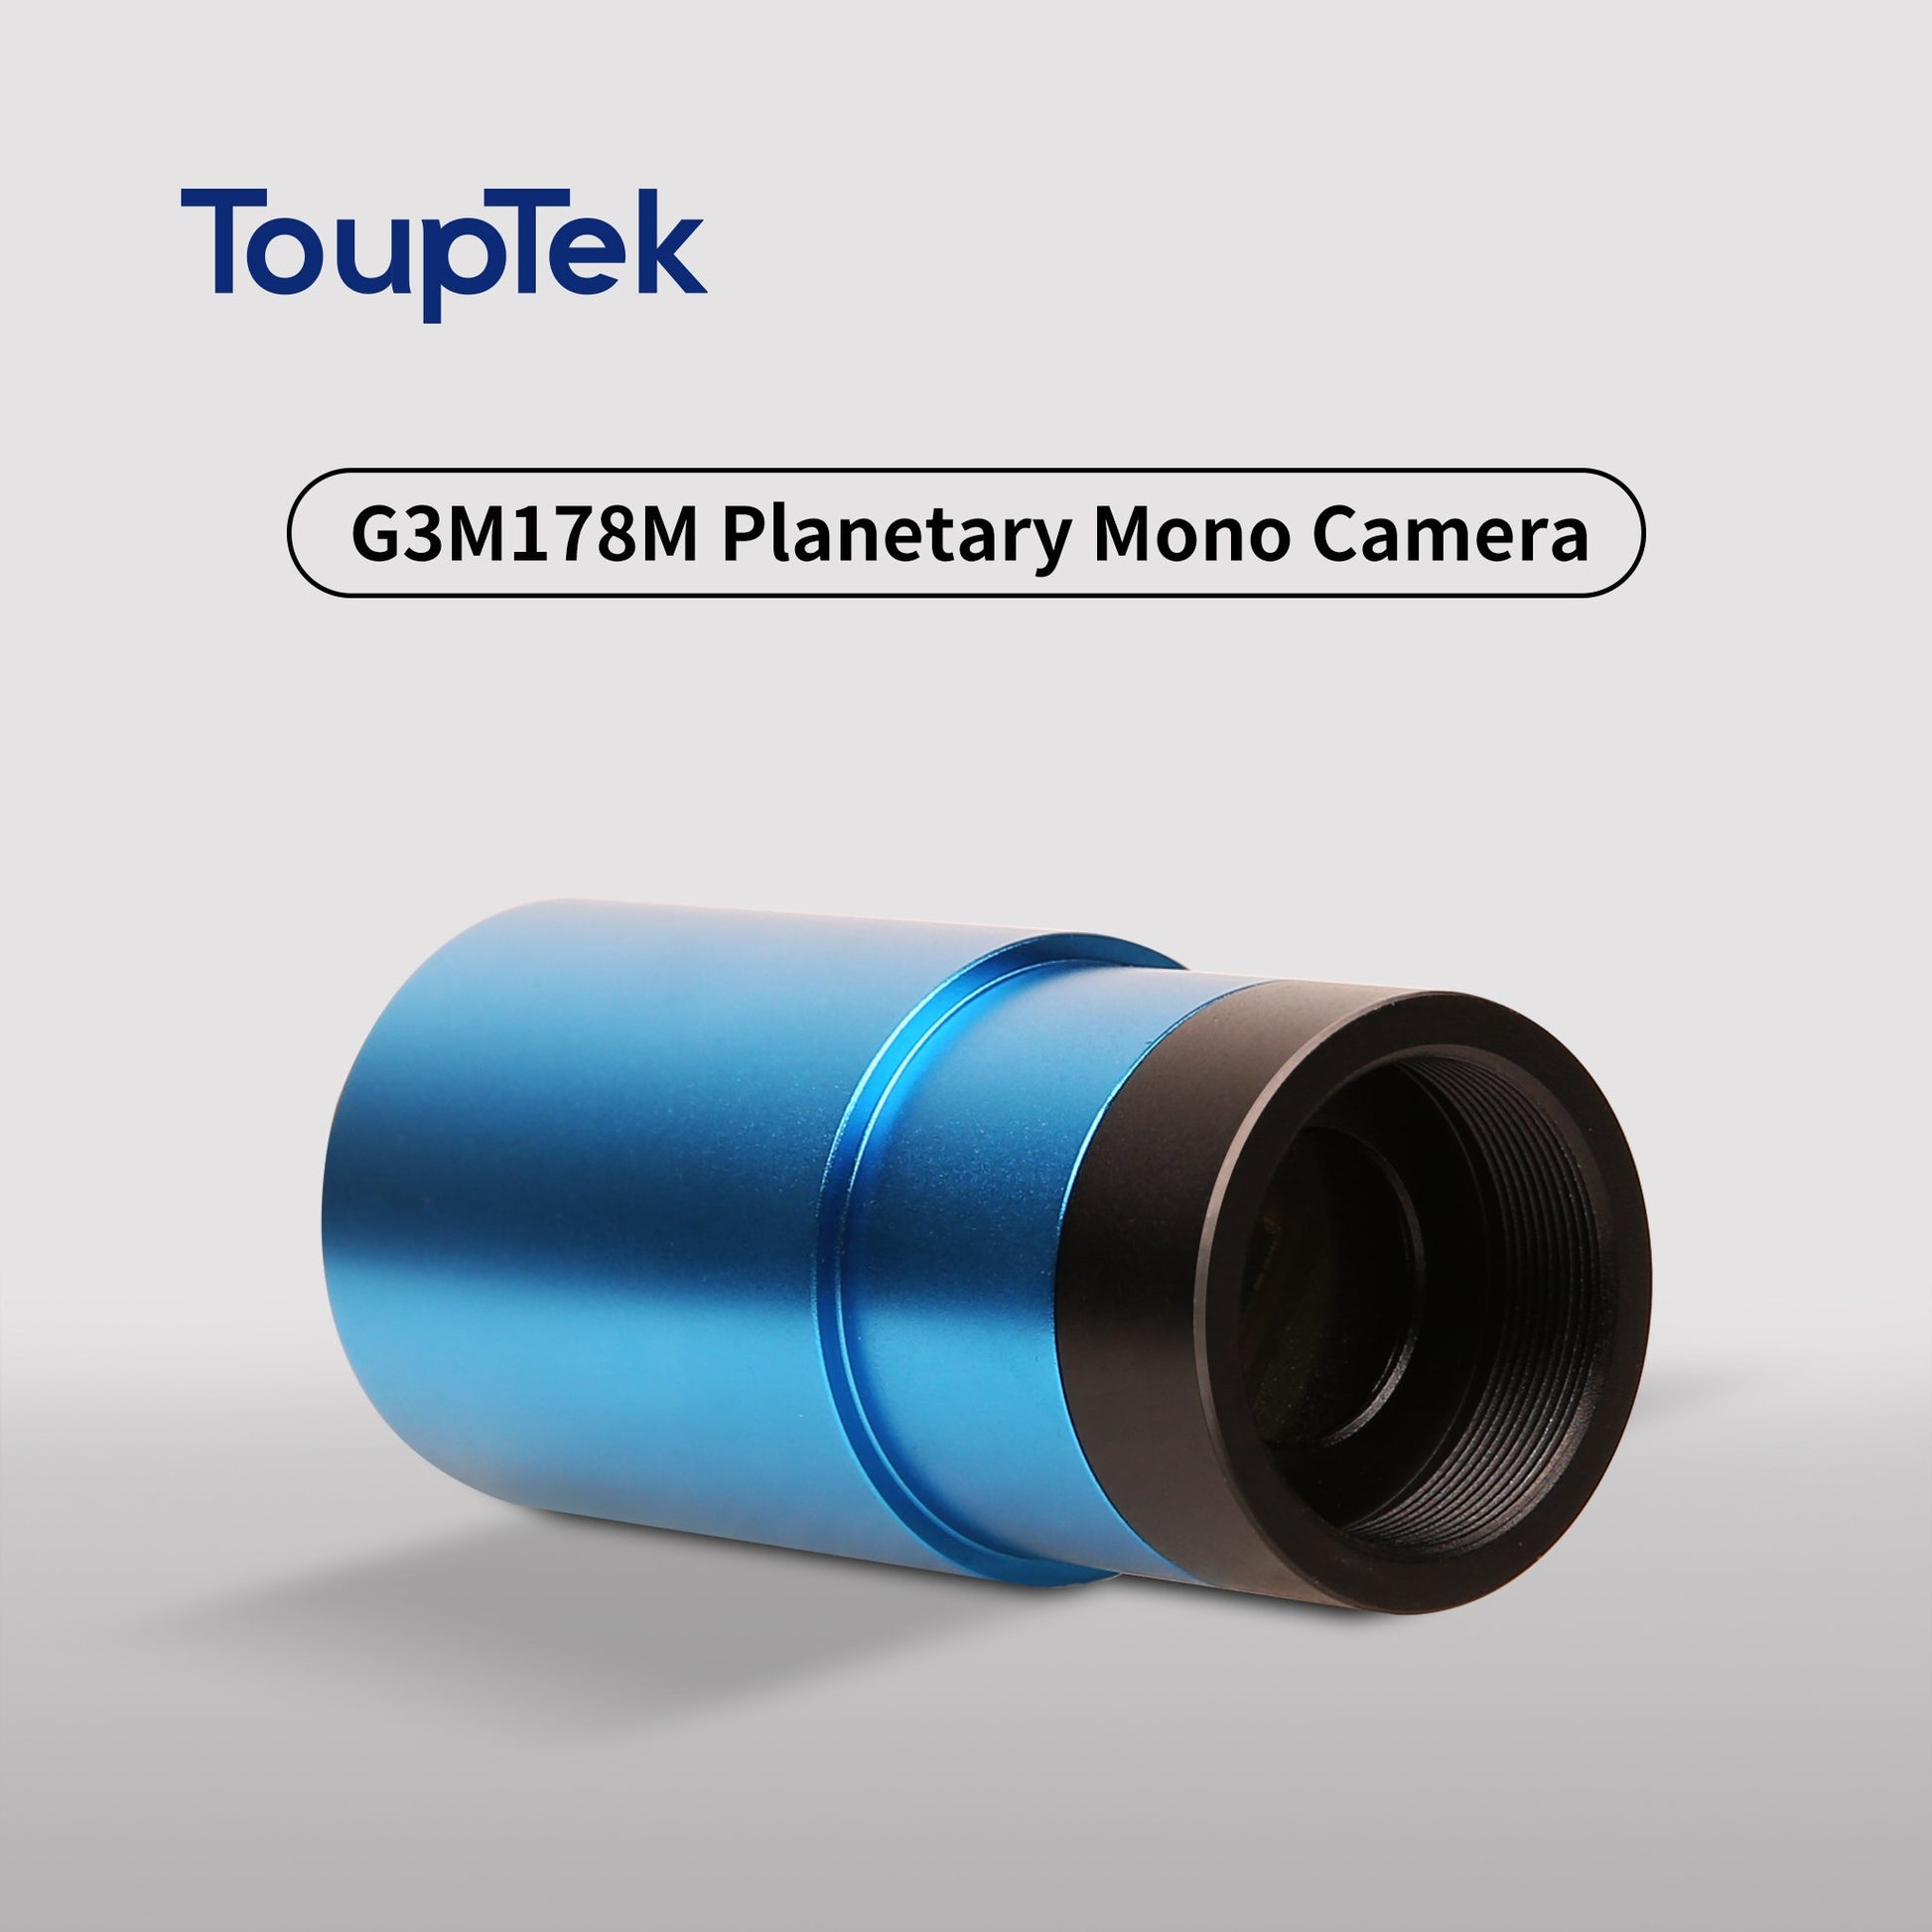 G3M178M Planetary Mono Camera